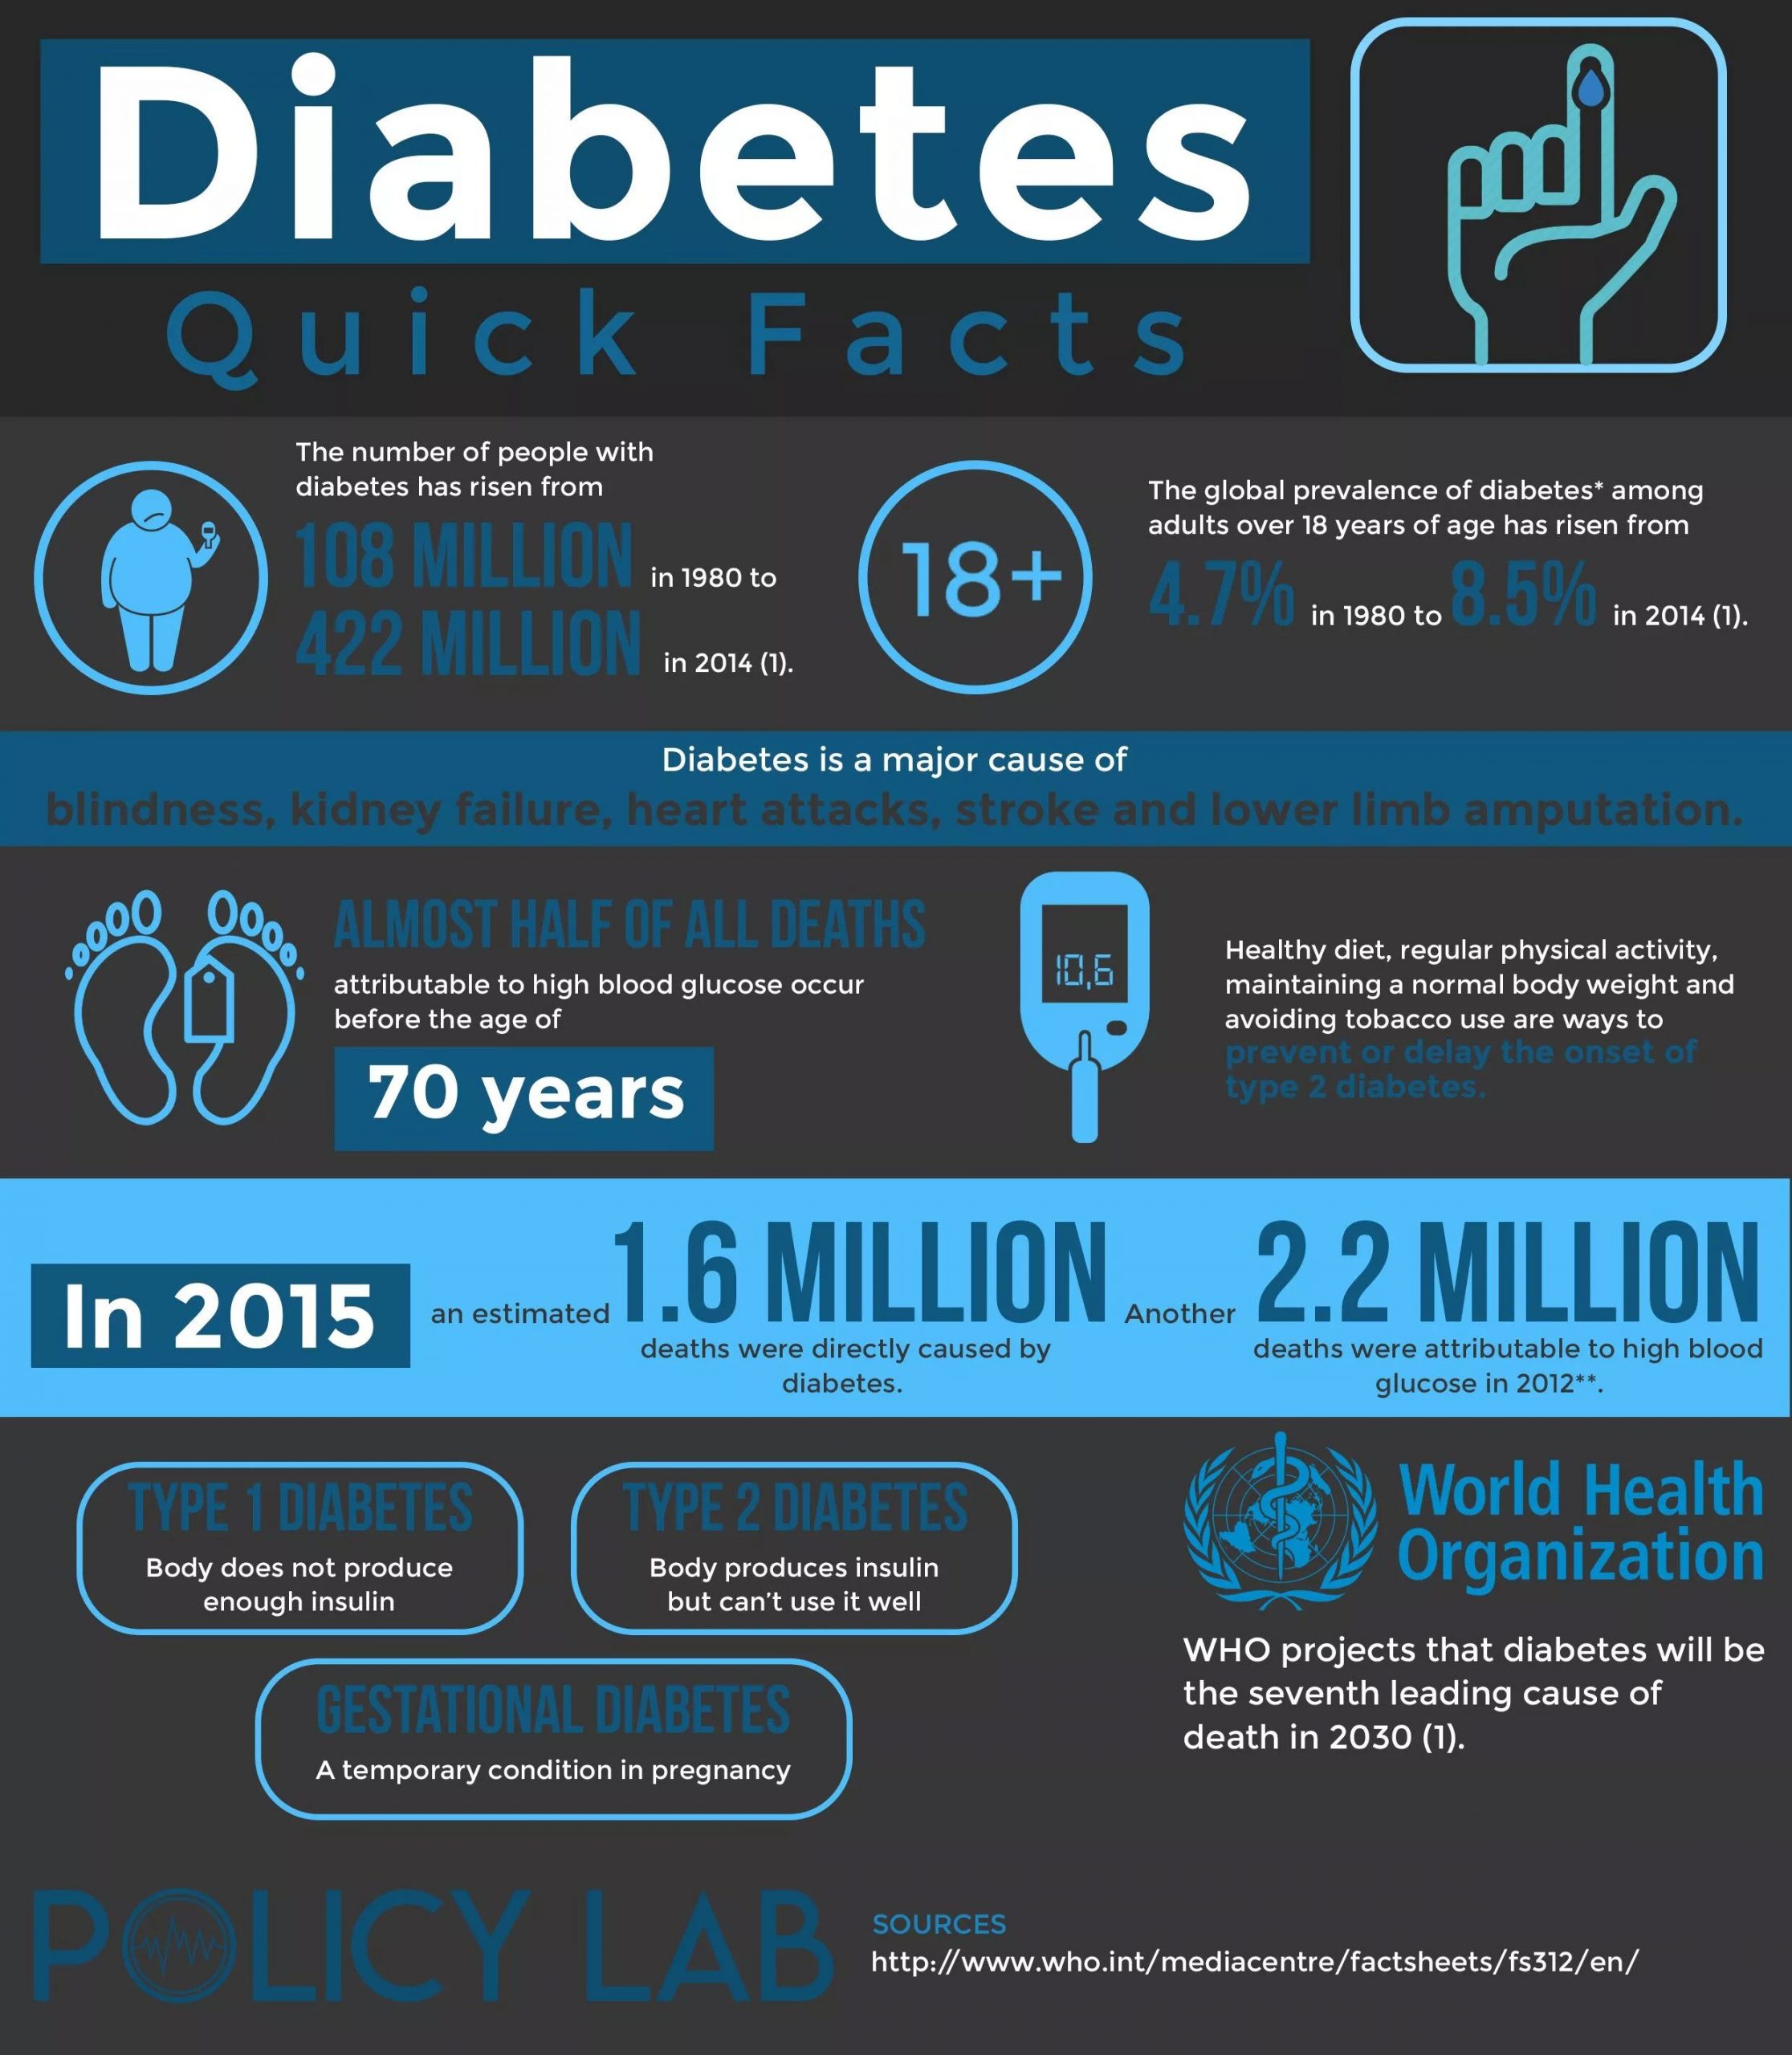 diabetes research update